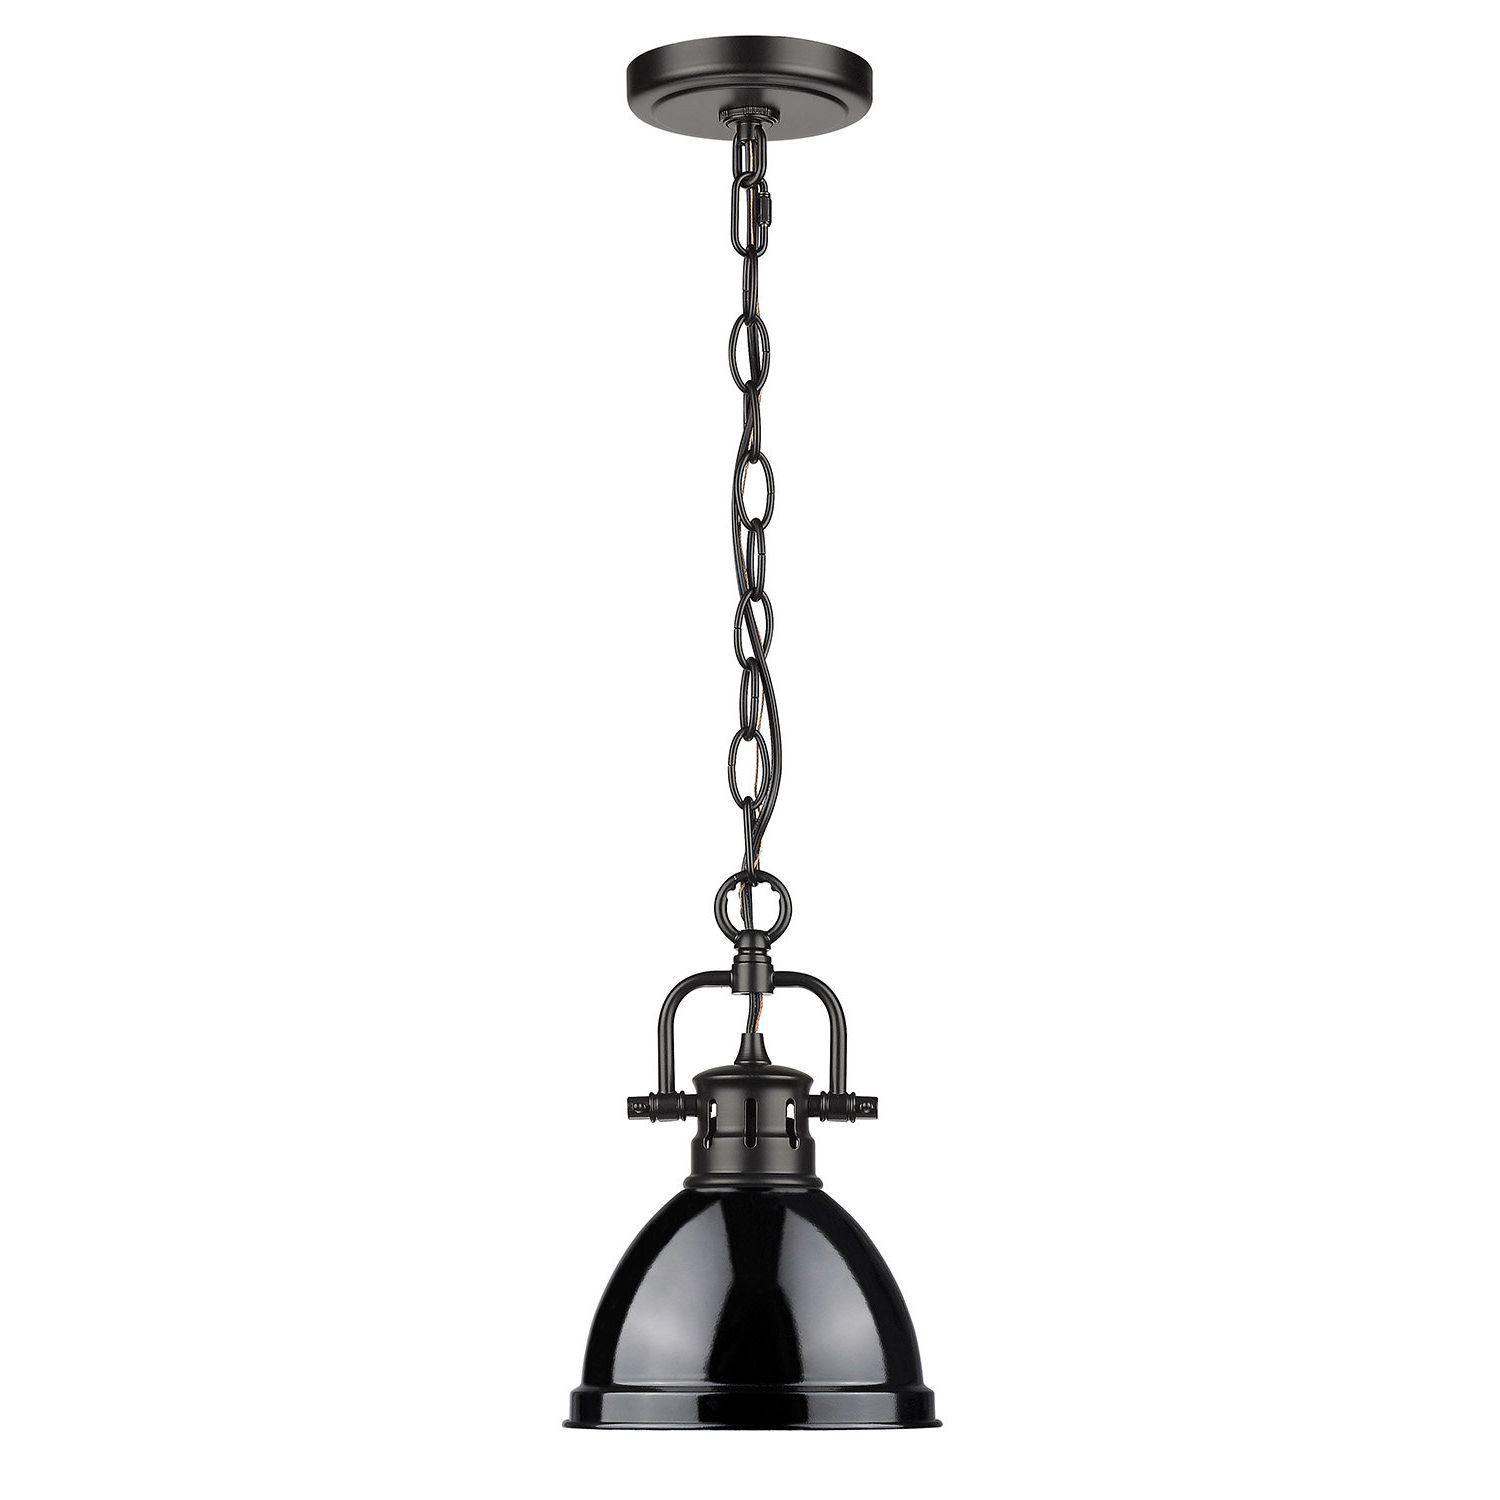 Famous Beachcrest Home Bodalla 1 Light Single Bell Pendant Intended For Terry 1 Light Single Bell Pendants (View 2 of 20)